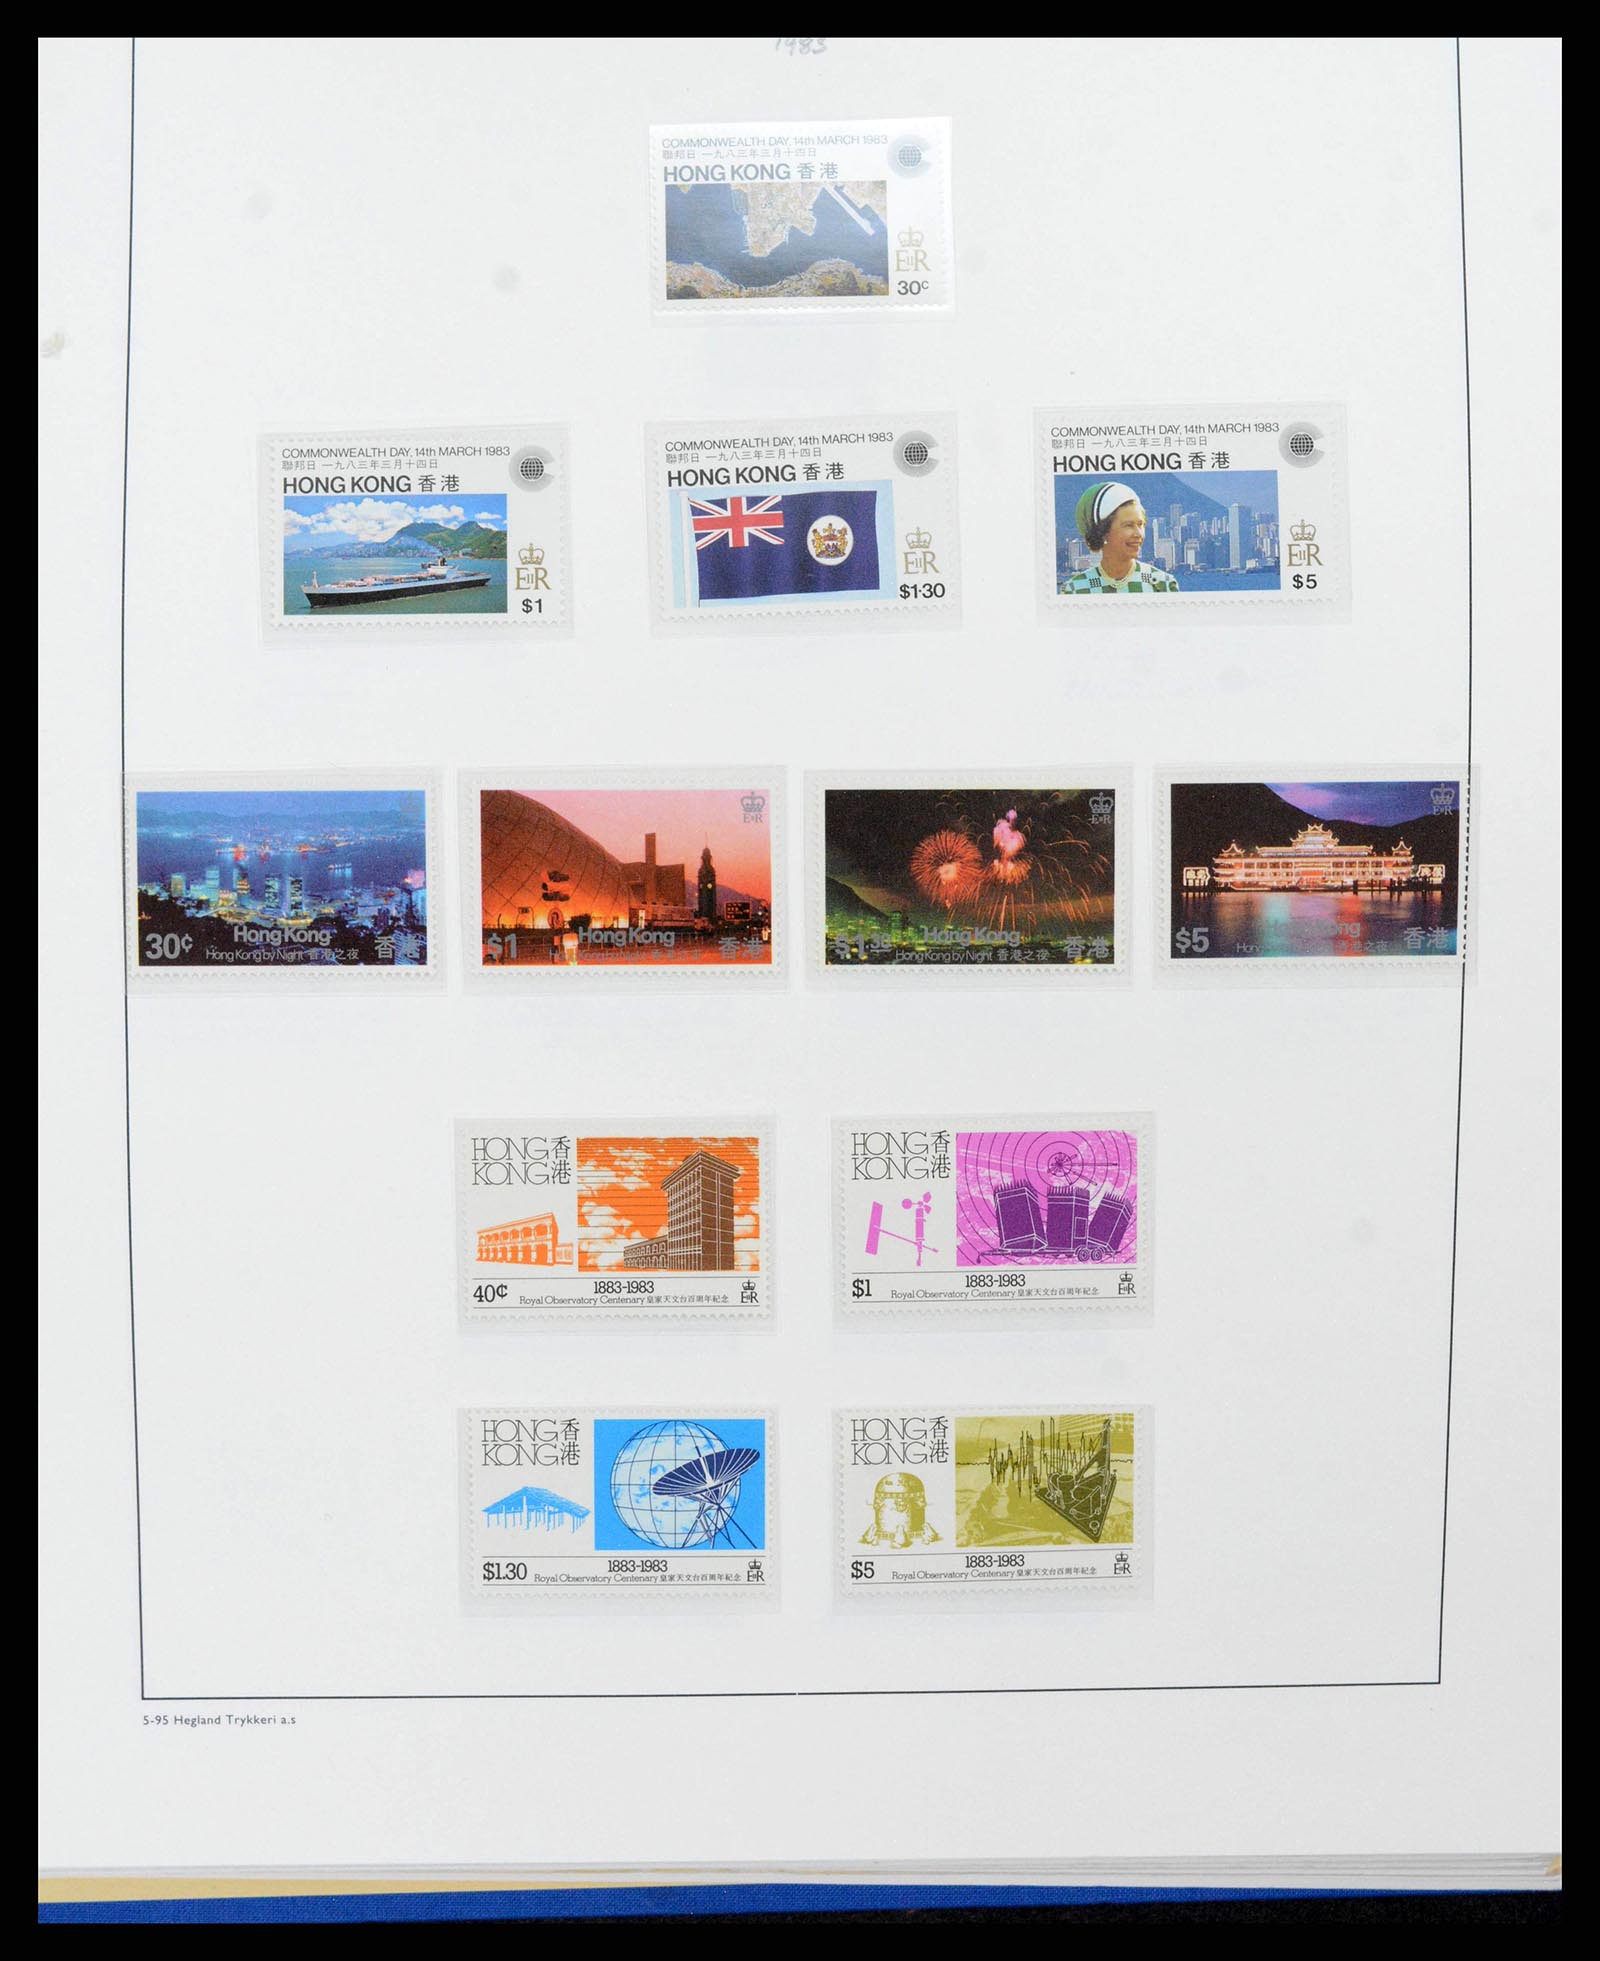 37955 0080 - Stamp collection 37955 Hong Kong supercollection 1862-2007.